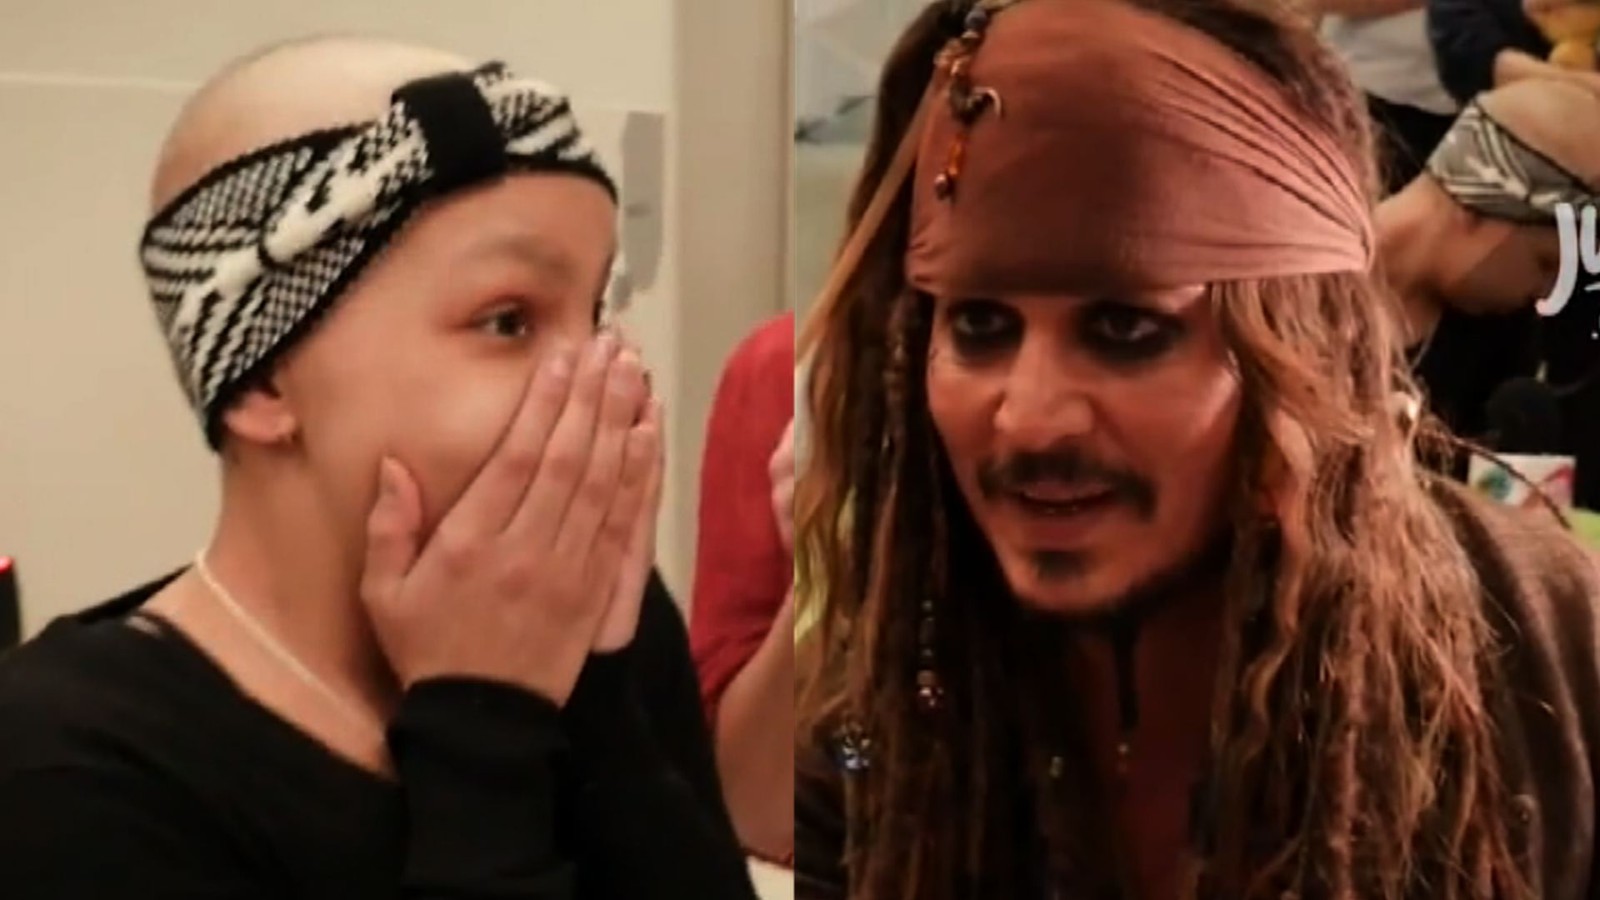 Johnny Depp surprises young girl - CNN Video